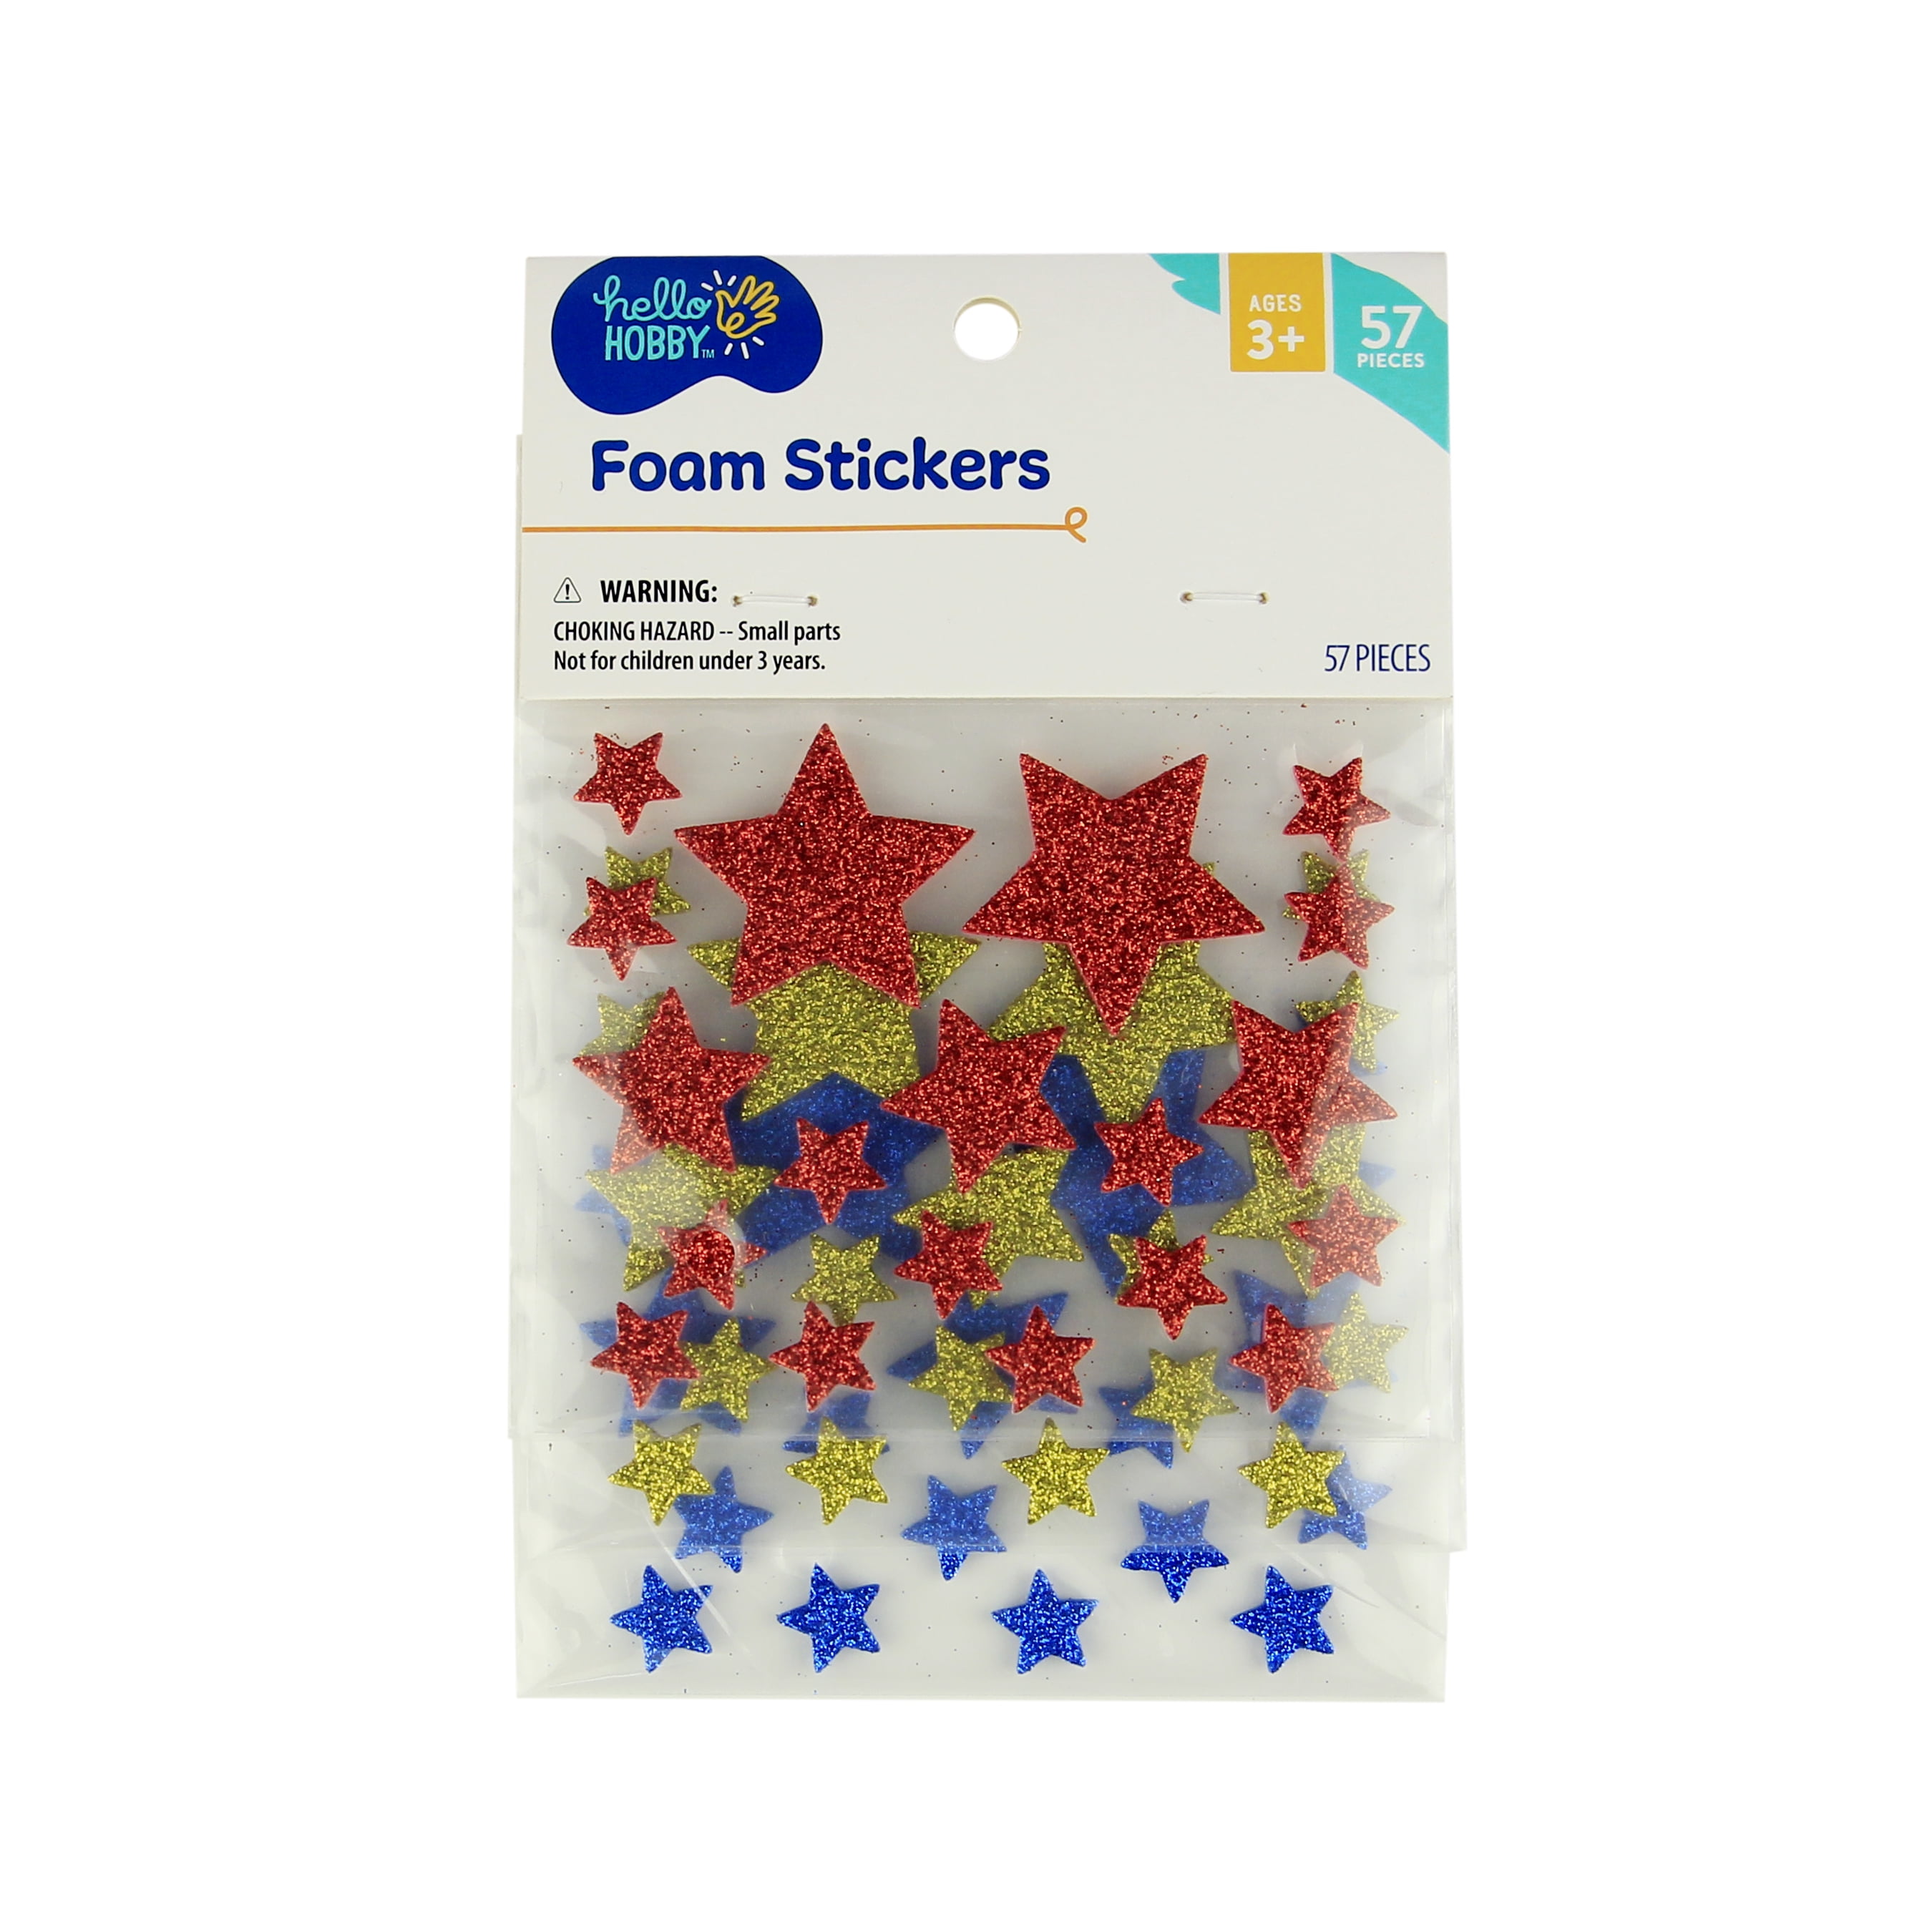 Glitter Foam Stickers - Stars - Silver and Gold - CE-10083